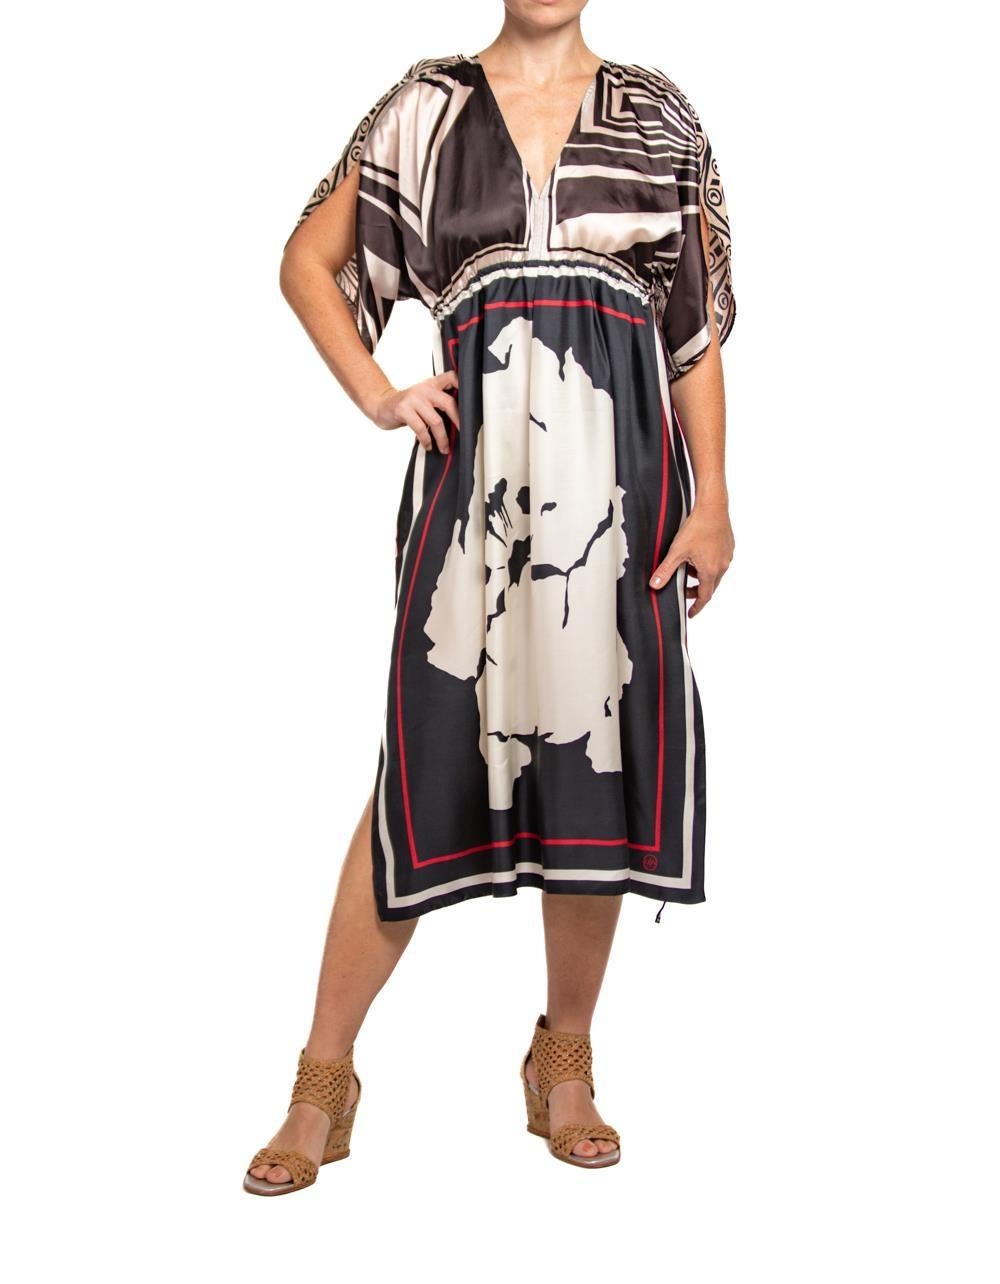 MORPHEW COLLECTION Black & White Geometric Silk Virgo Empire Waist Dress Made F For Sale 3